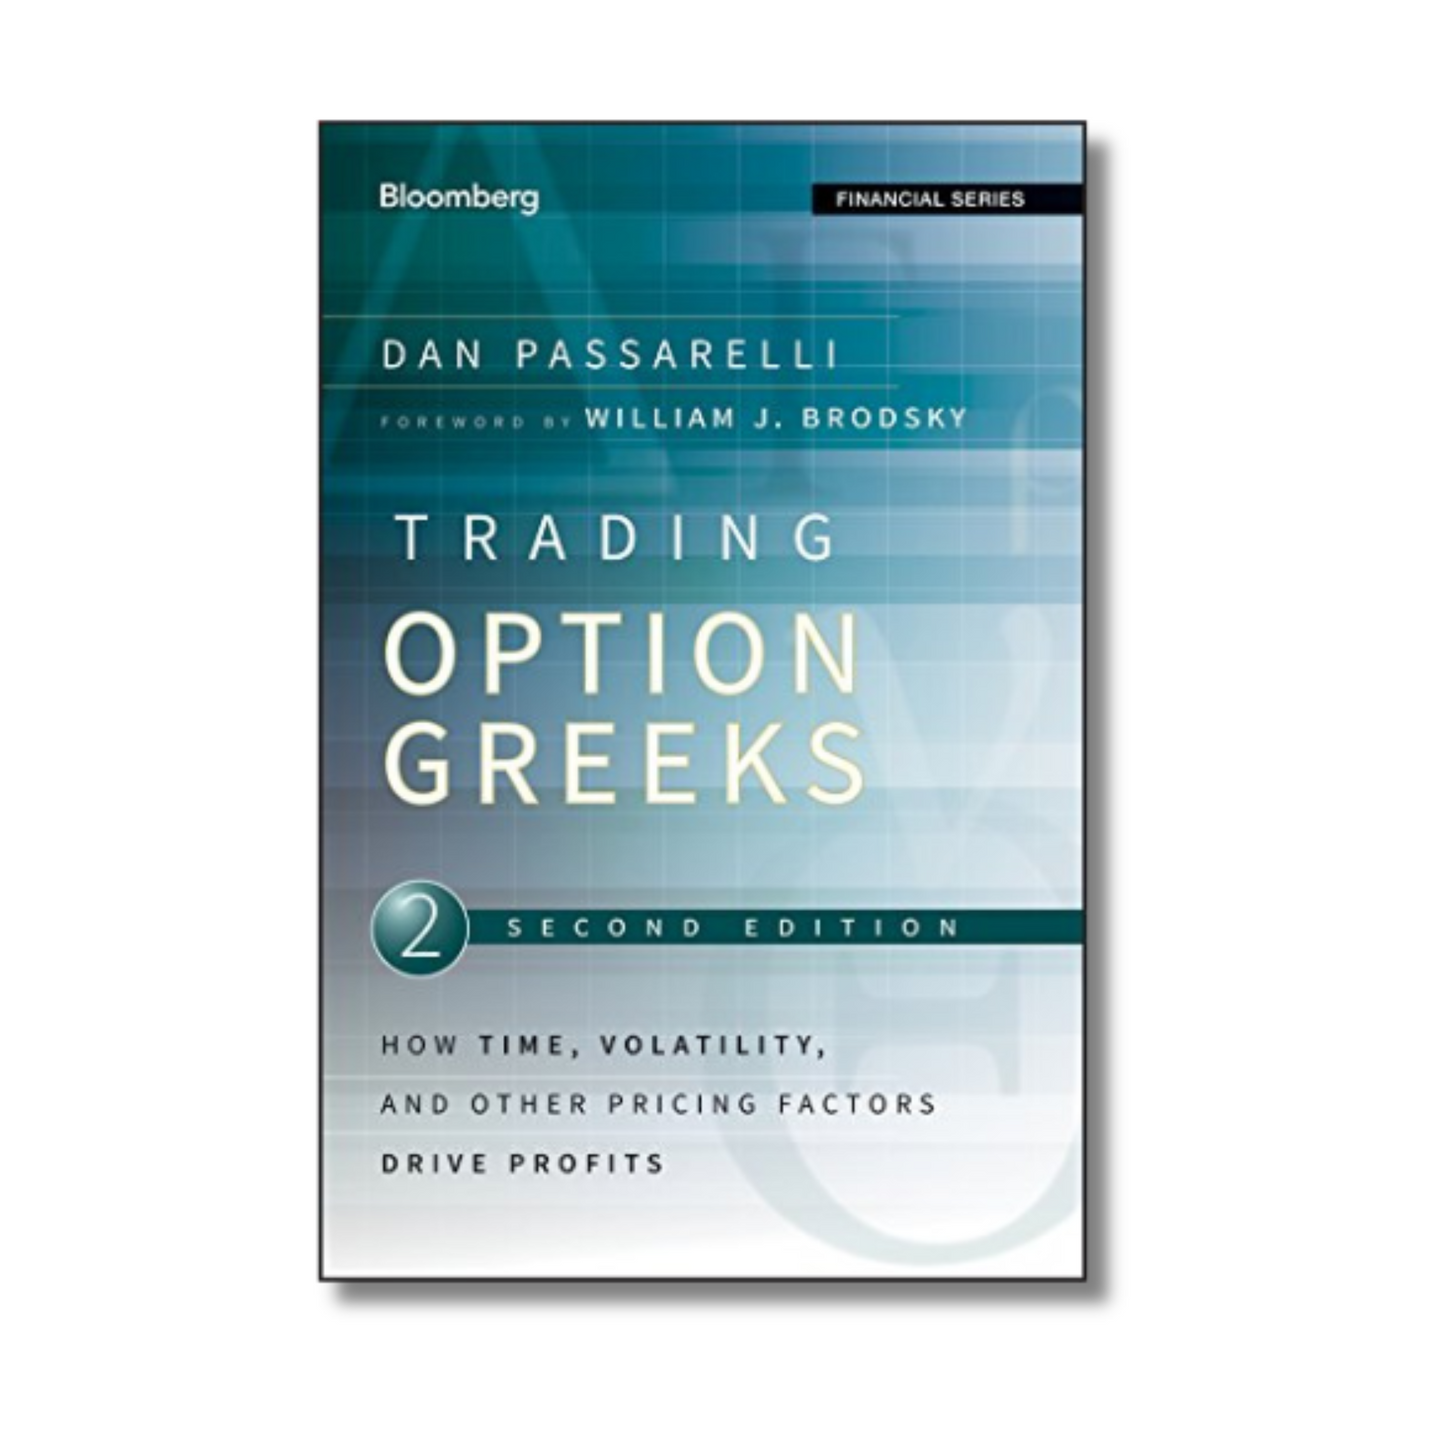 Trading Options Greeks By Dan Passarelli (Paperback)